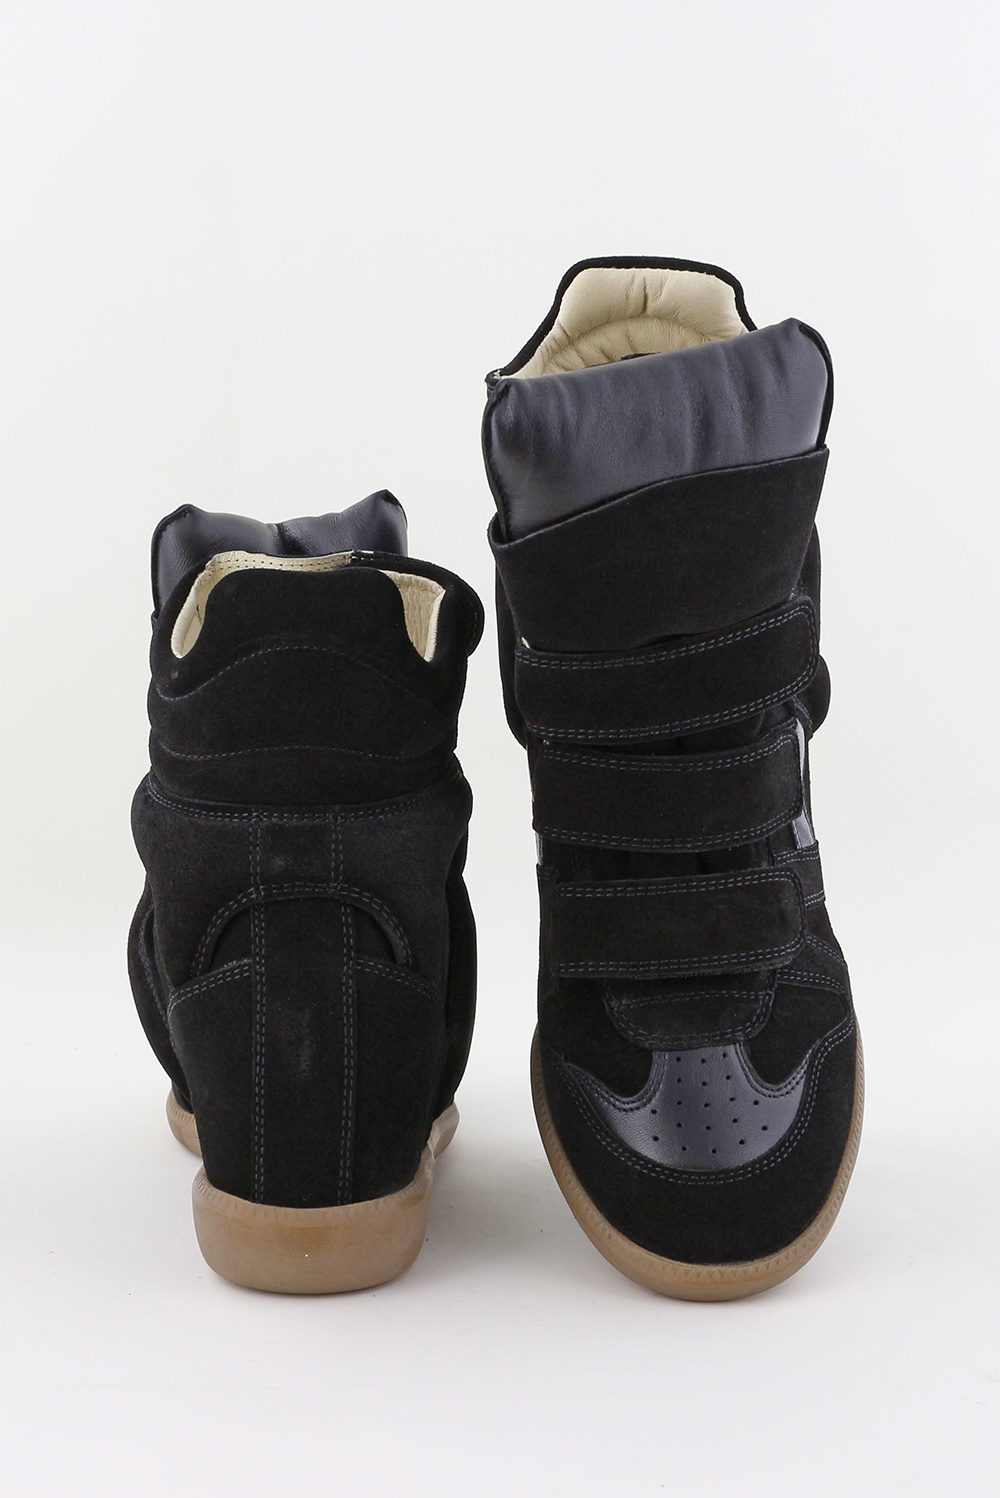 Grace Australische persoon Grand Isabel Marant Isabel Marant sneakers Bekett BK0006-00M101S zwart - Marjon  Snieders